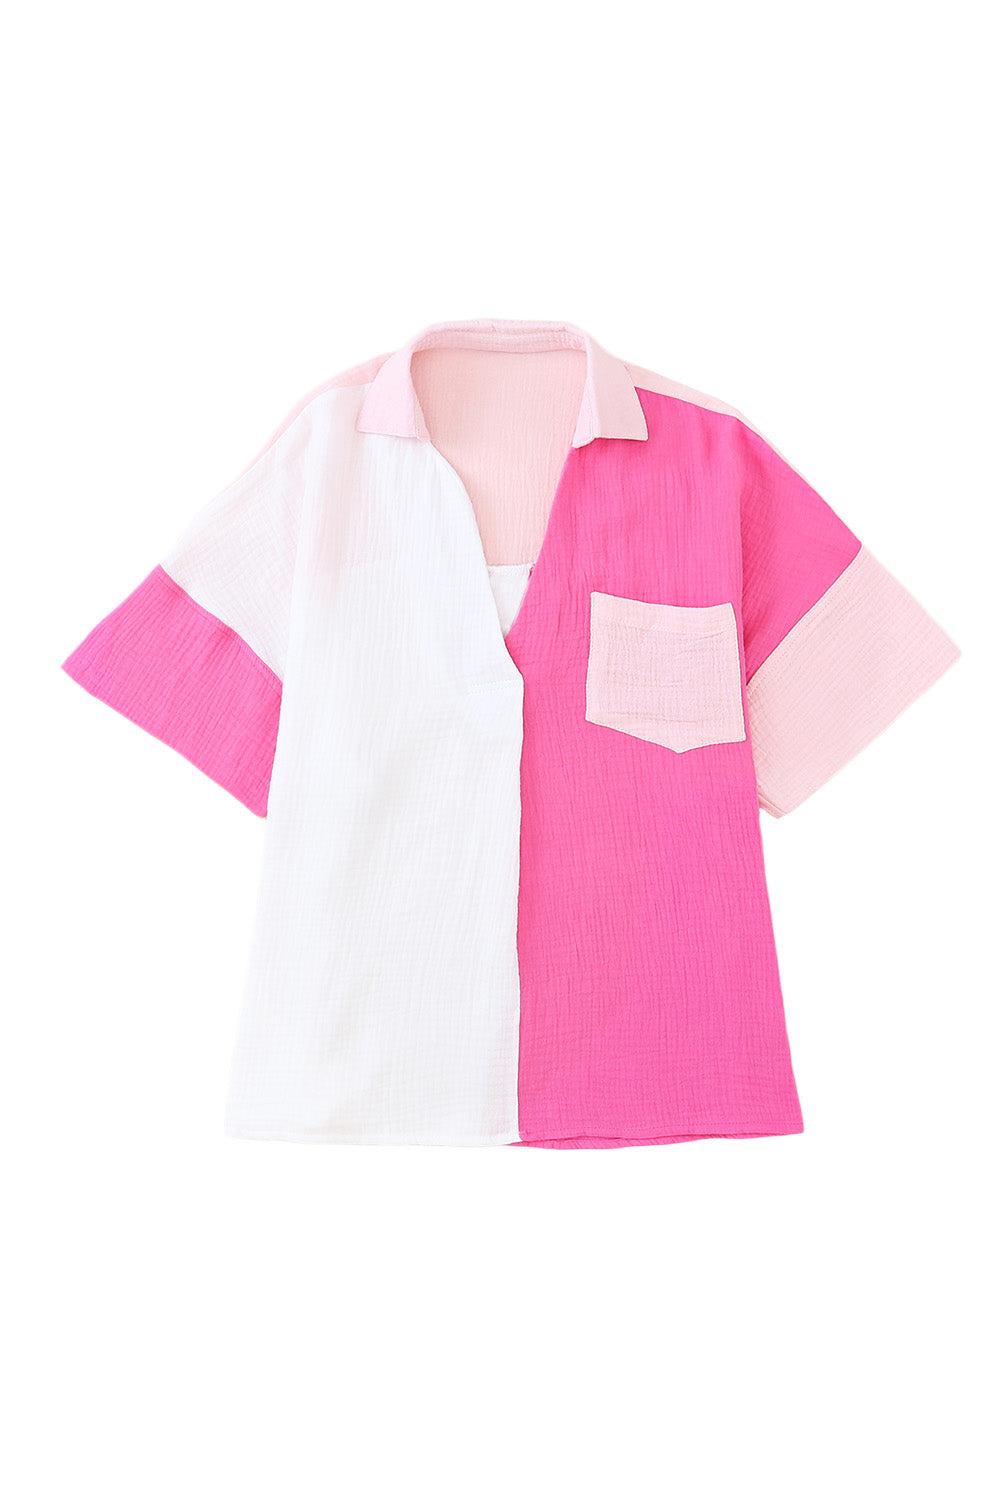 Rose Collared Neck Color Block Short Sleeve Polo Shirt